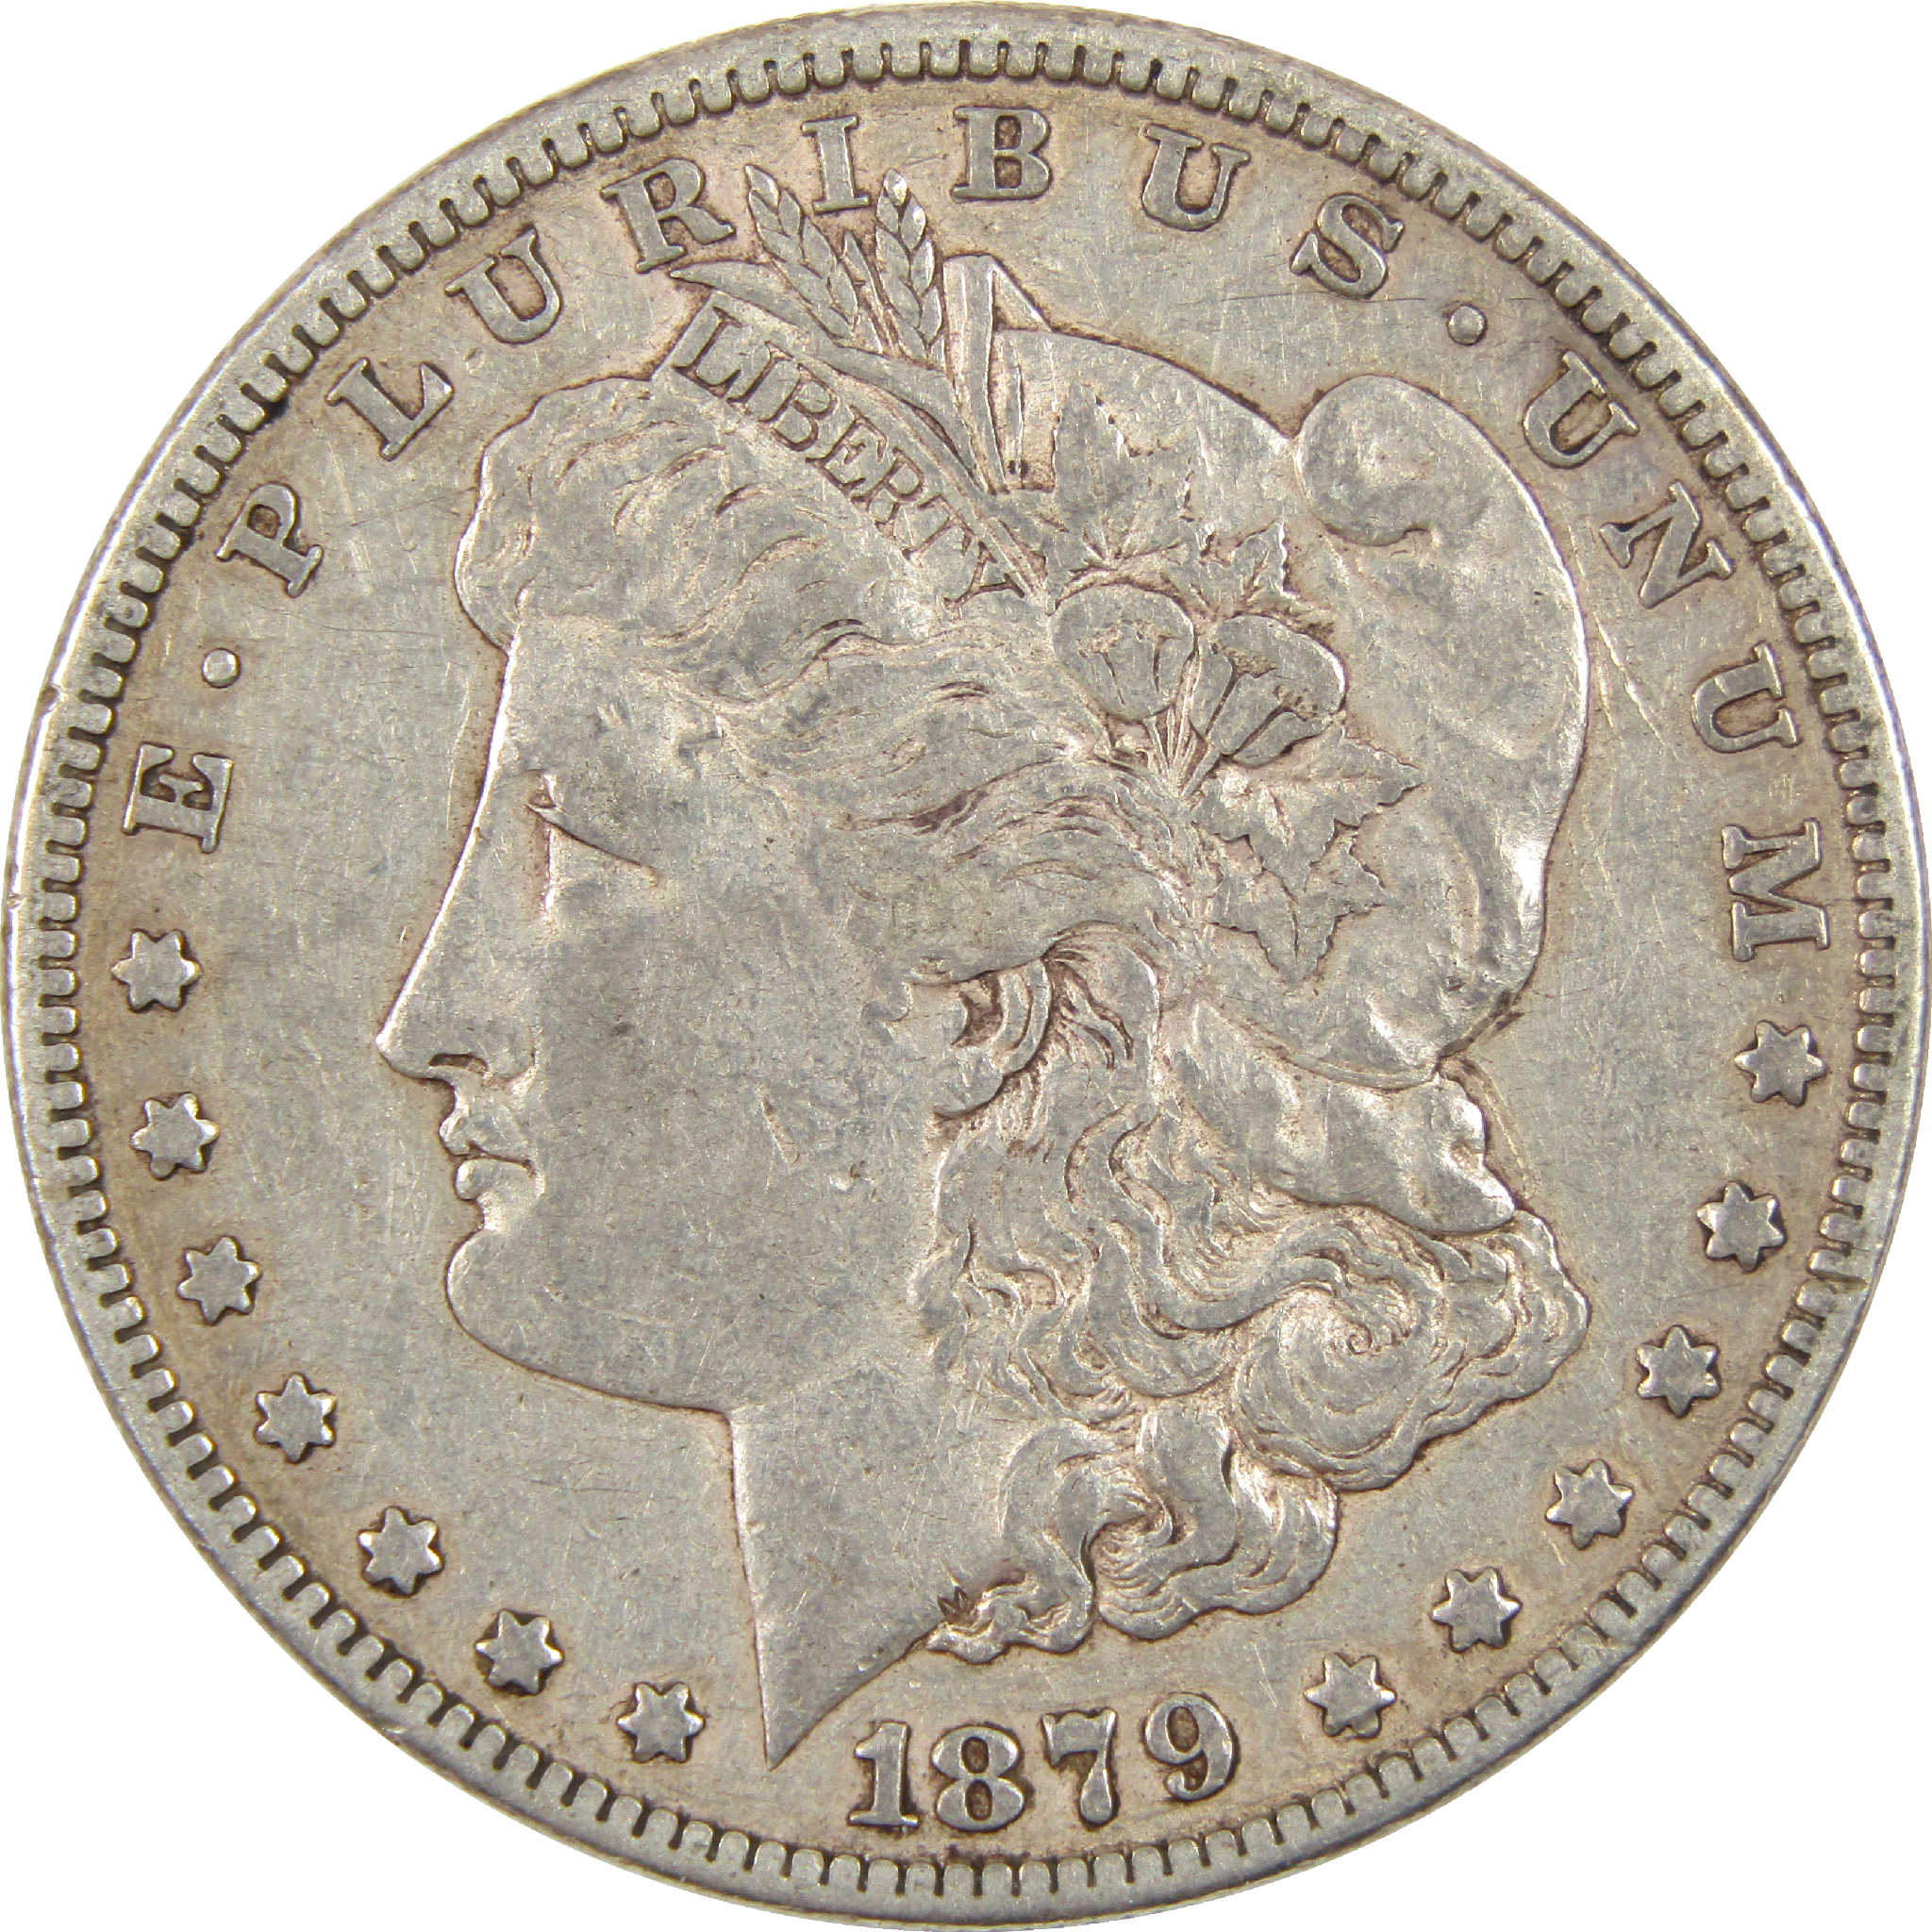 1879 S Rev 78 Morgan Dollar VF Very Fine Silver $1 Coin SKU:I11457 - Morgan coin - Morgan silver dollar - Morgan silver dollar for sale - Profile Coins &amp; Collectibles